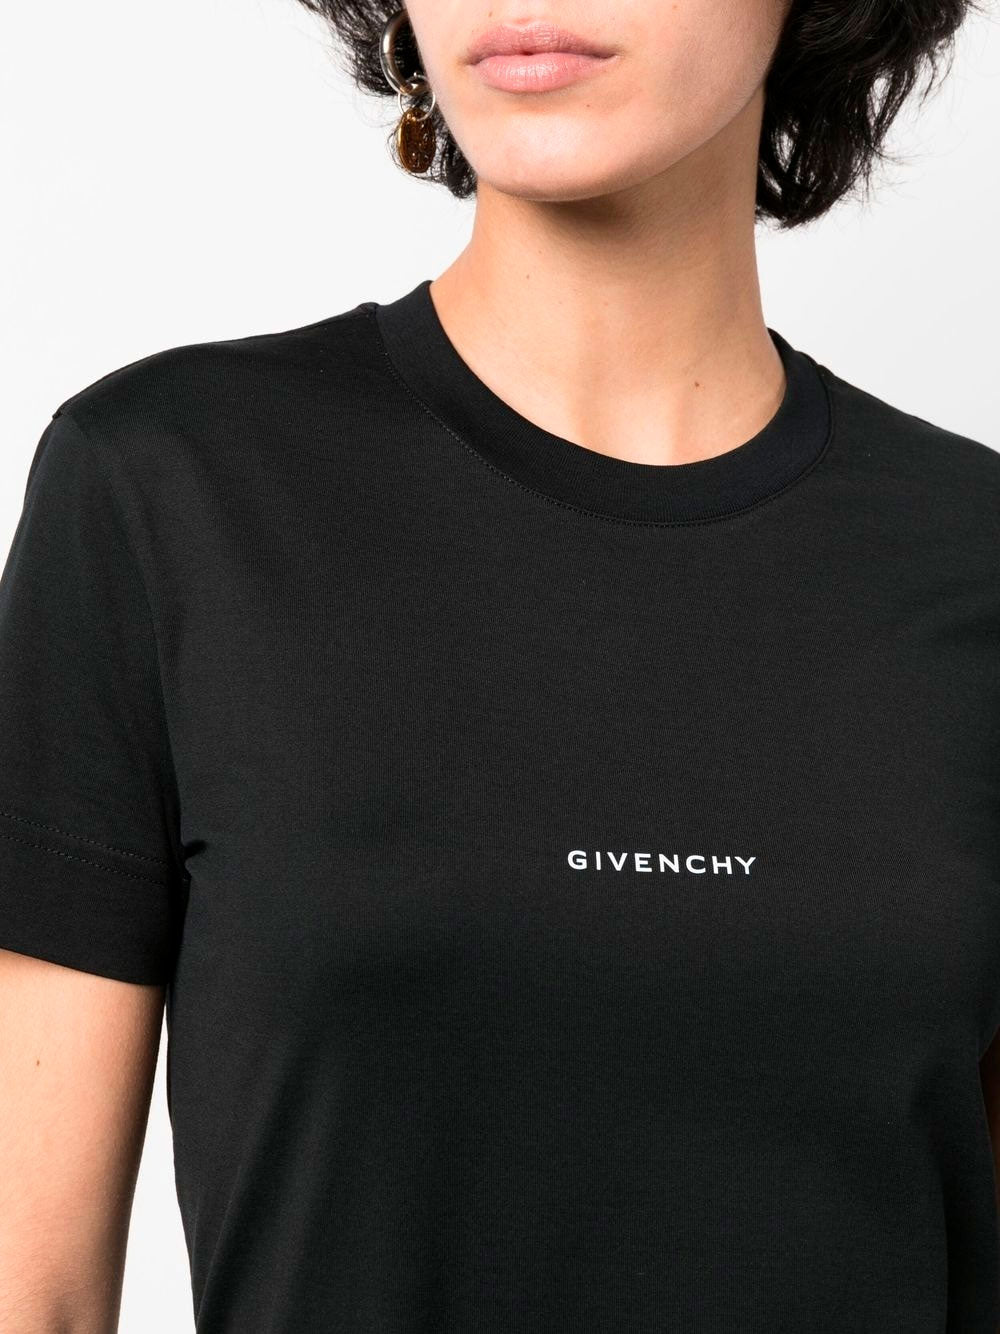 GivenchyCotton t-shirt at Fashion Clinic